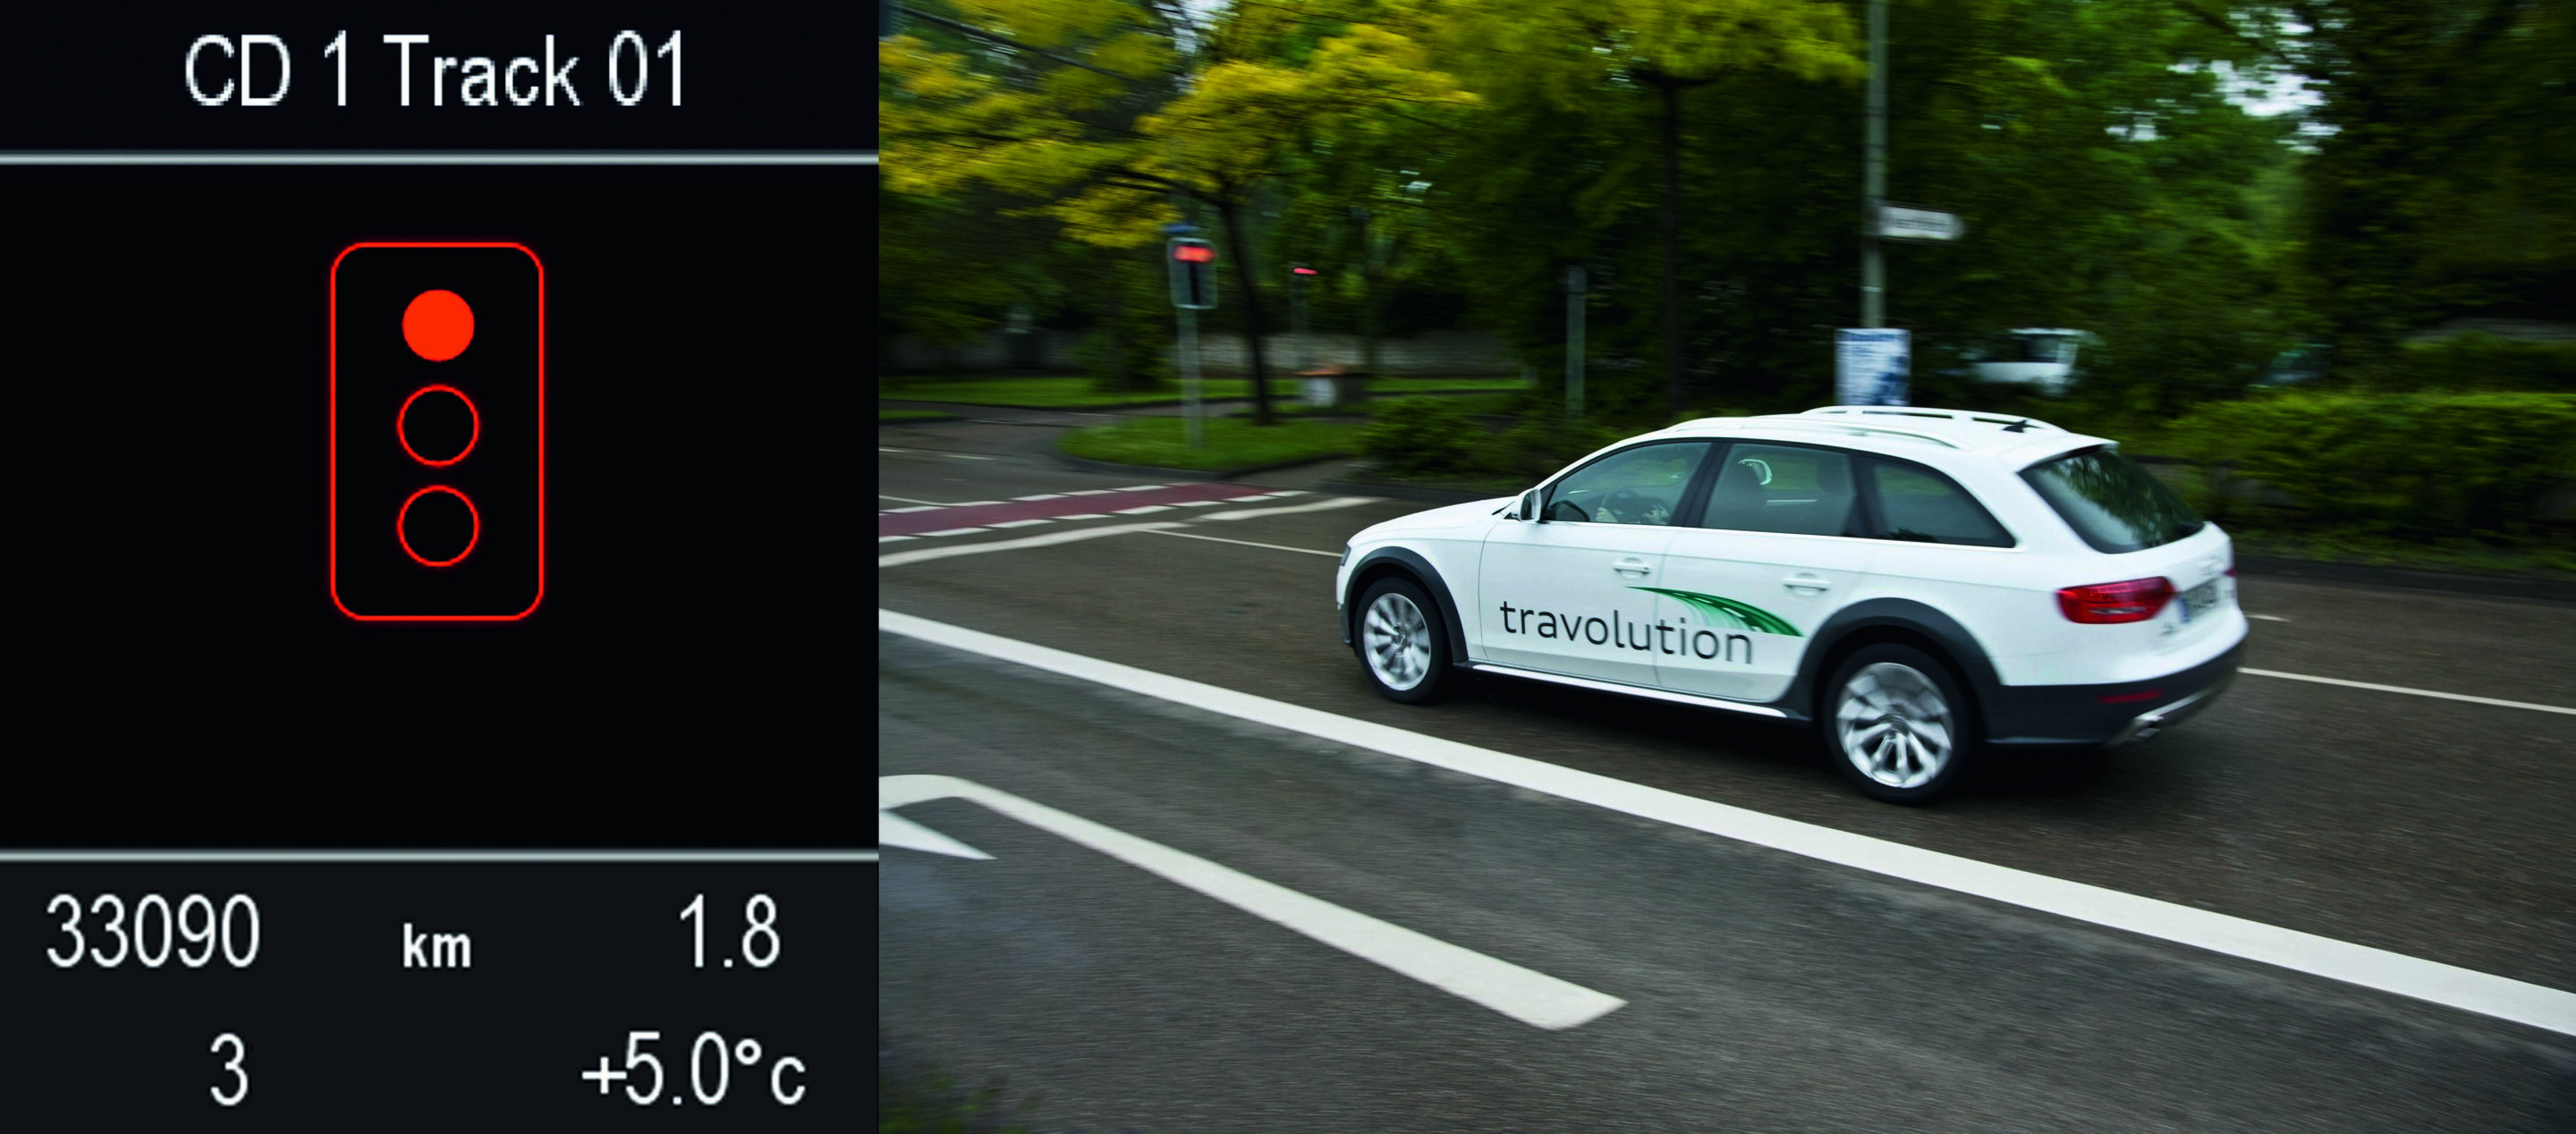 Efficient urban driving – the Audi travolution project